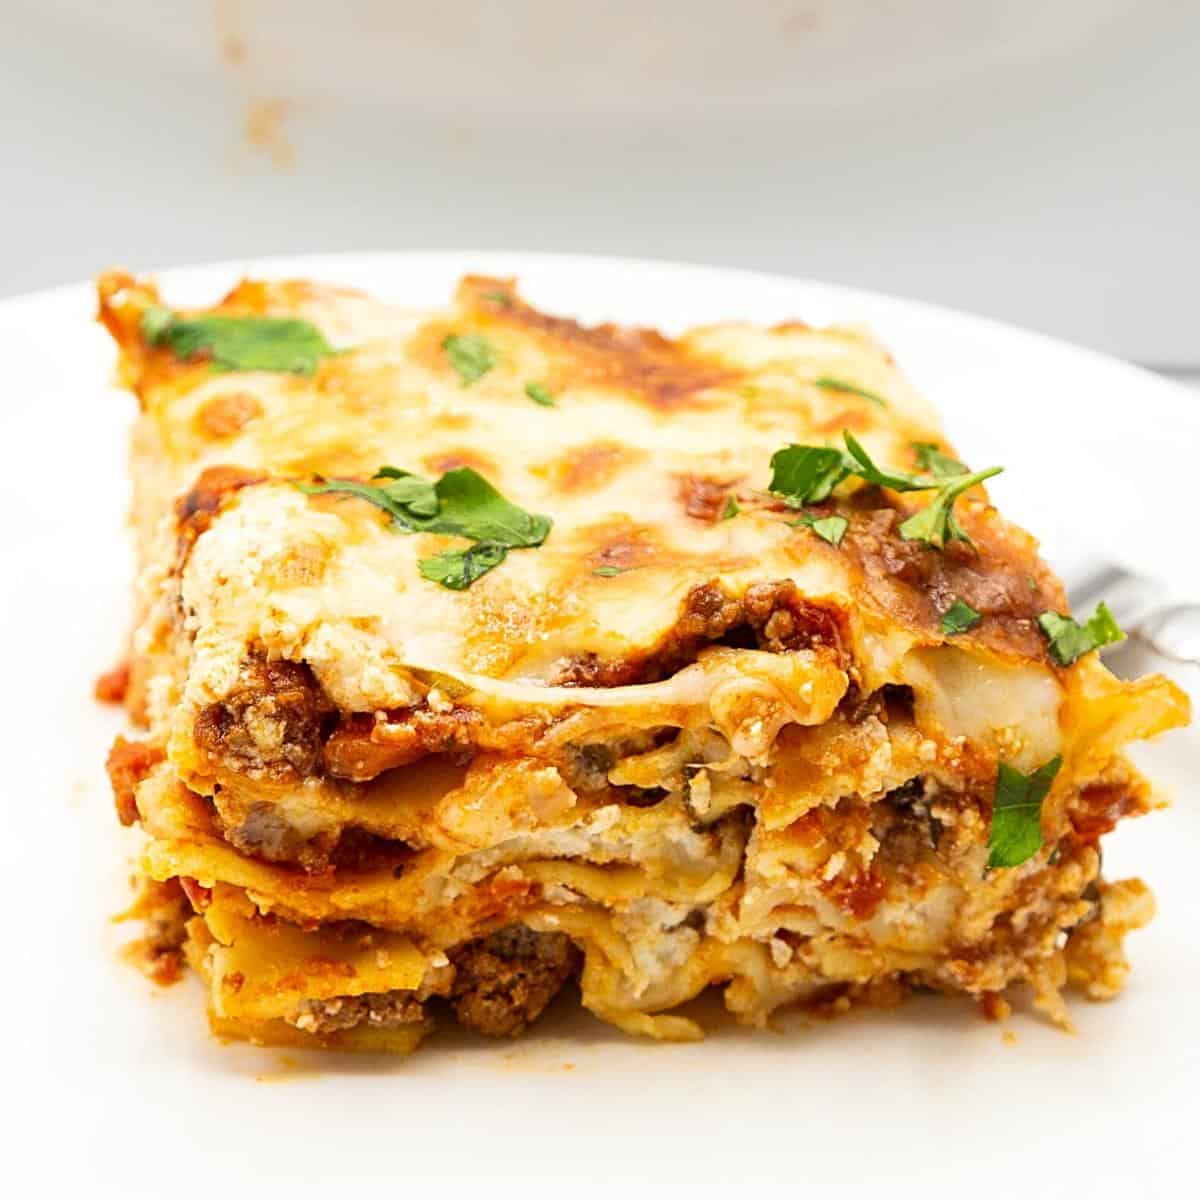 Best Lasagna Recipe with Ricotta and No-boil Noodles - Veena Azmanov